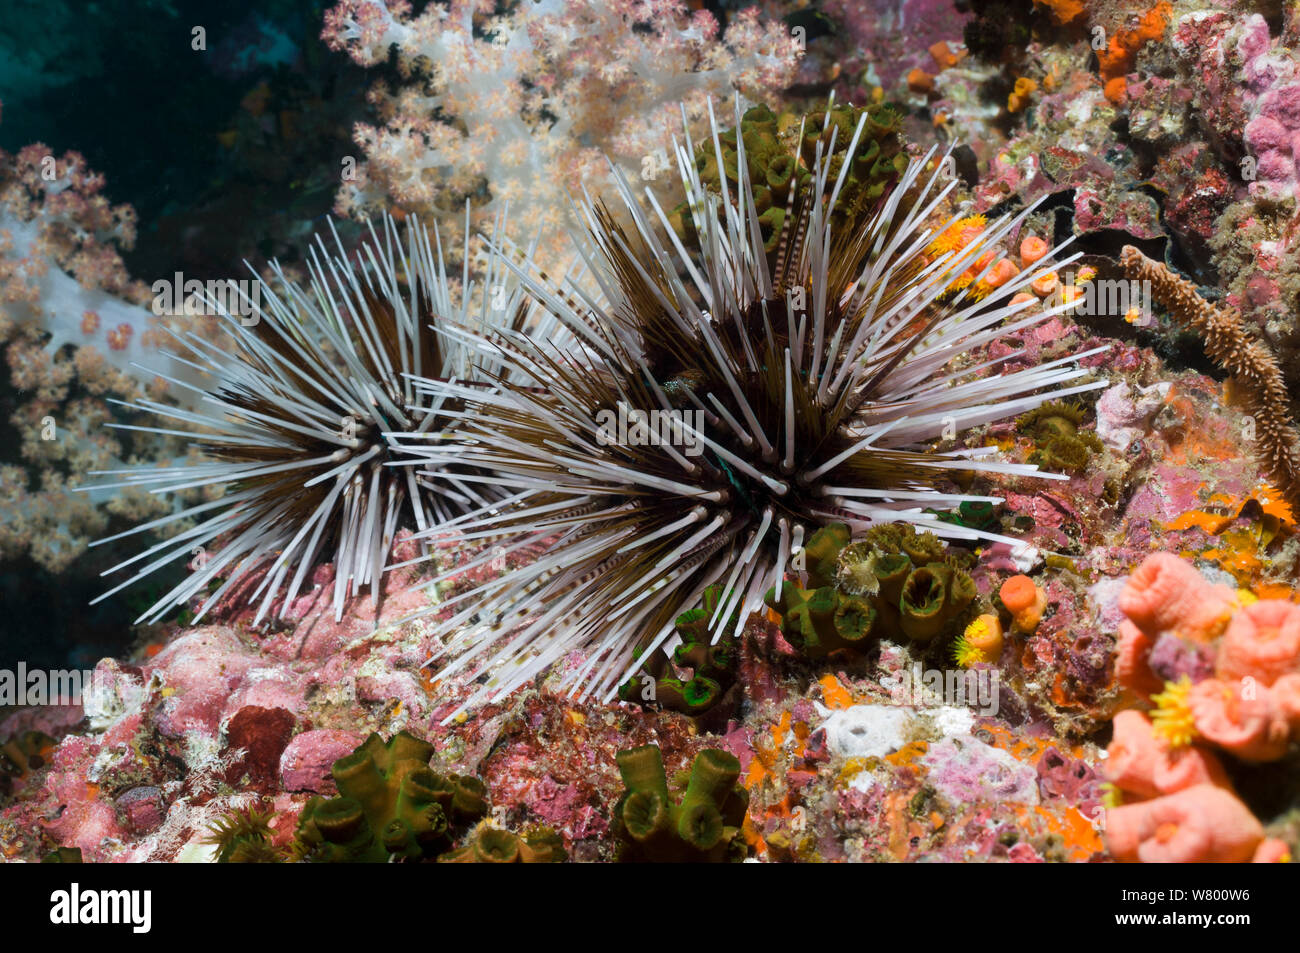 Banded sea urchin (Echinothrix calamaris)  Mabul, Malaysia.  Indo-Pacific. Stock Photo